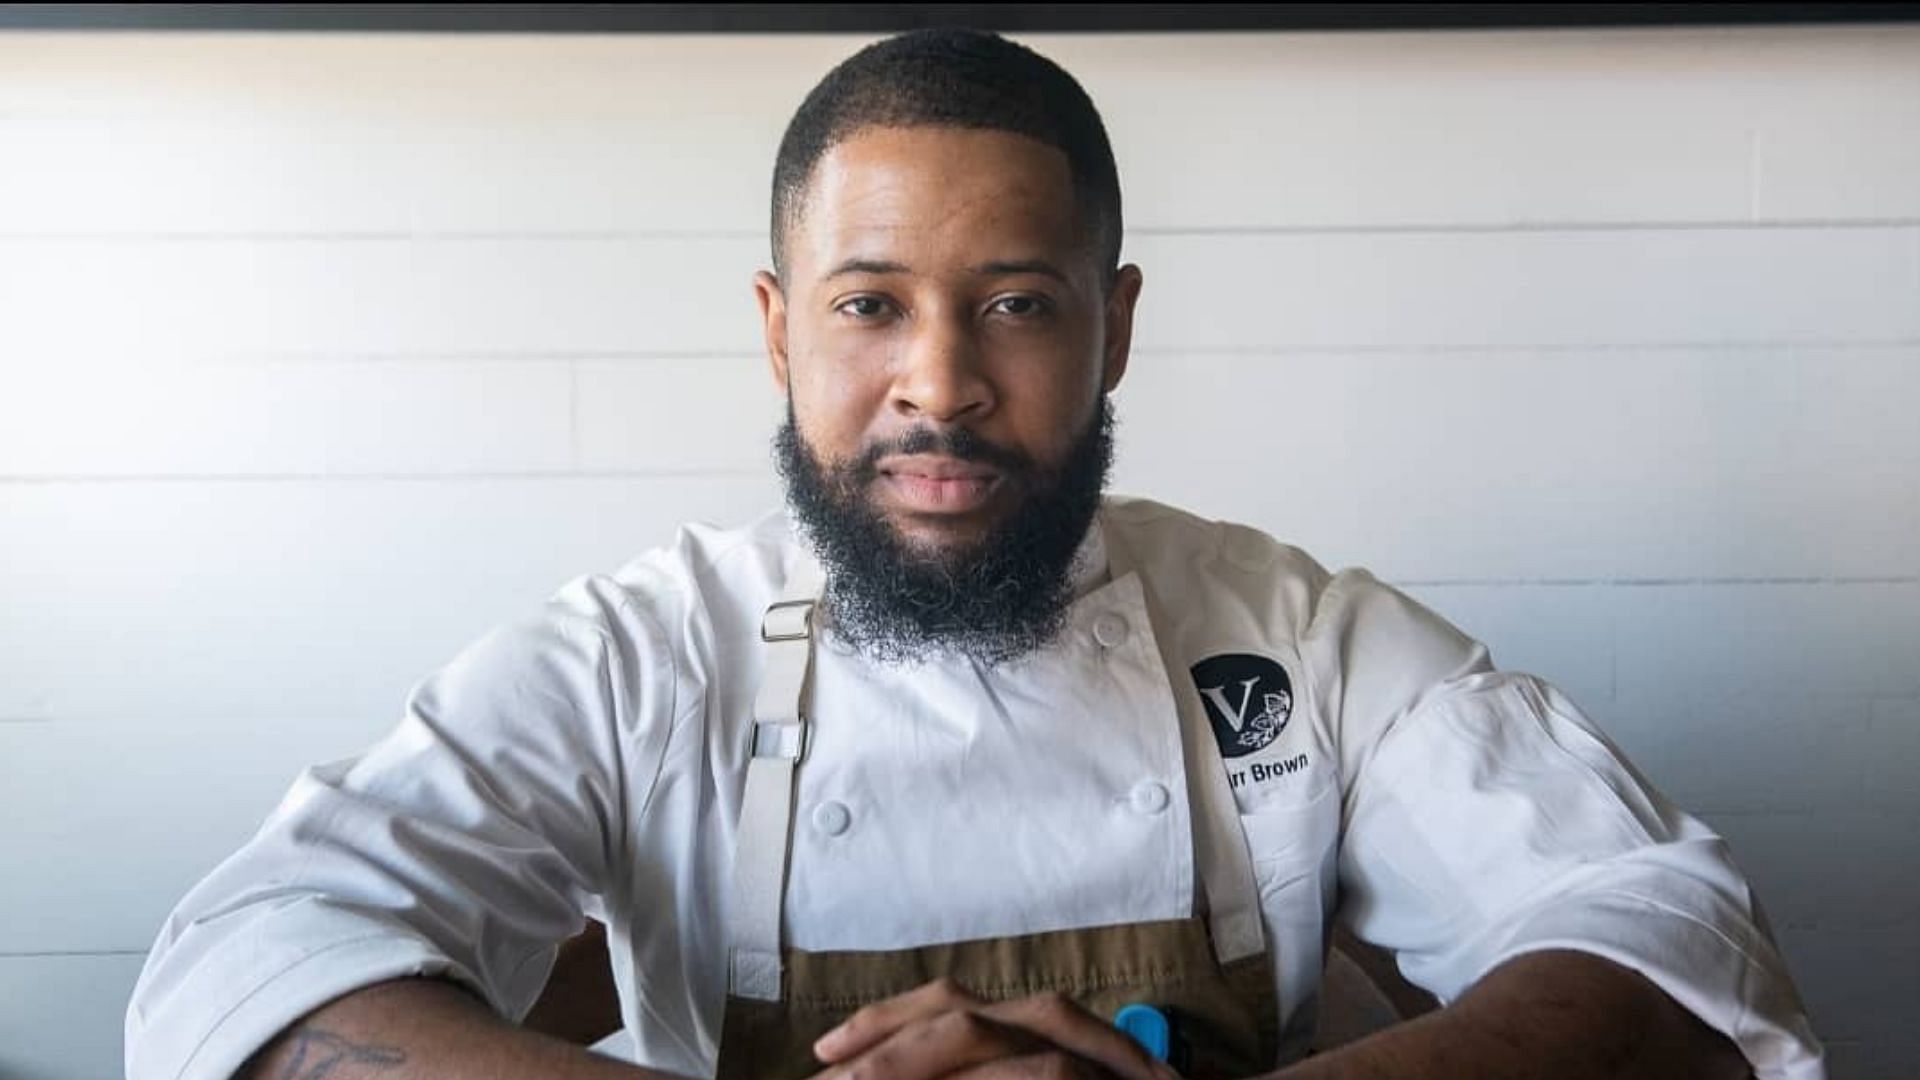 Meet Damarr Brown from Top Chef Season 19 (Image via browndamarr/Instagram)